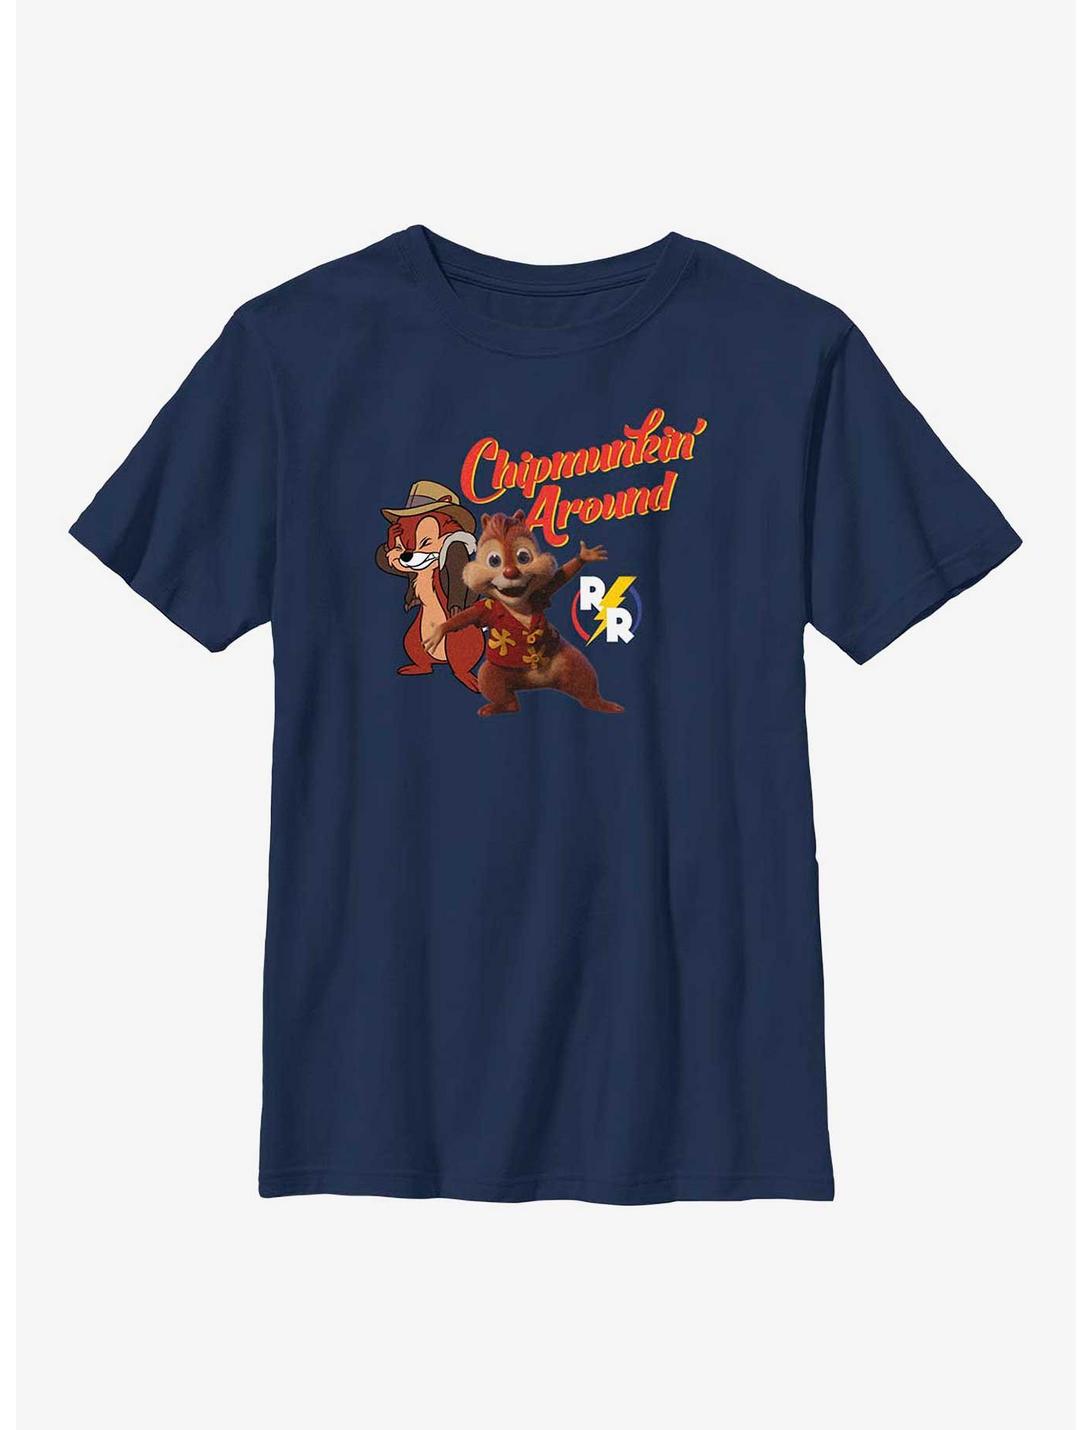 Disney Chip 'n Dale Chipmunkin' Around Youth T-Shirt, NAVY, hi-res